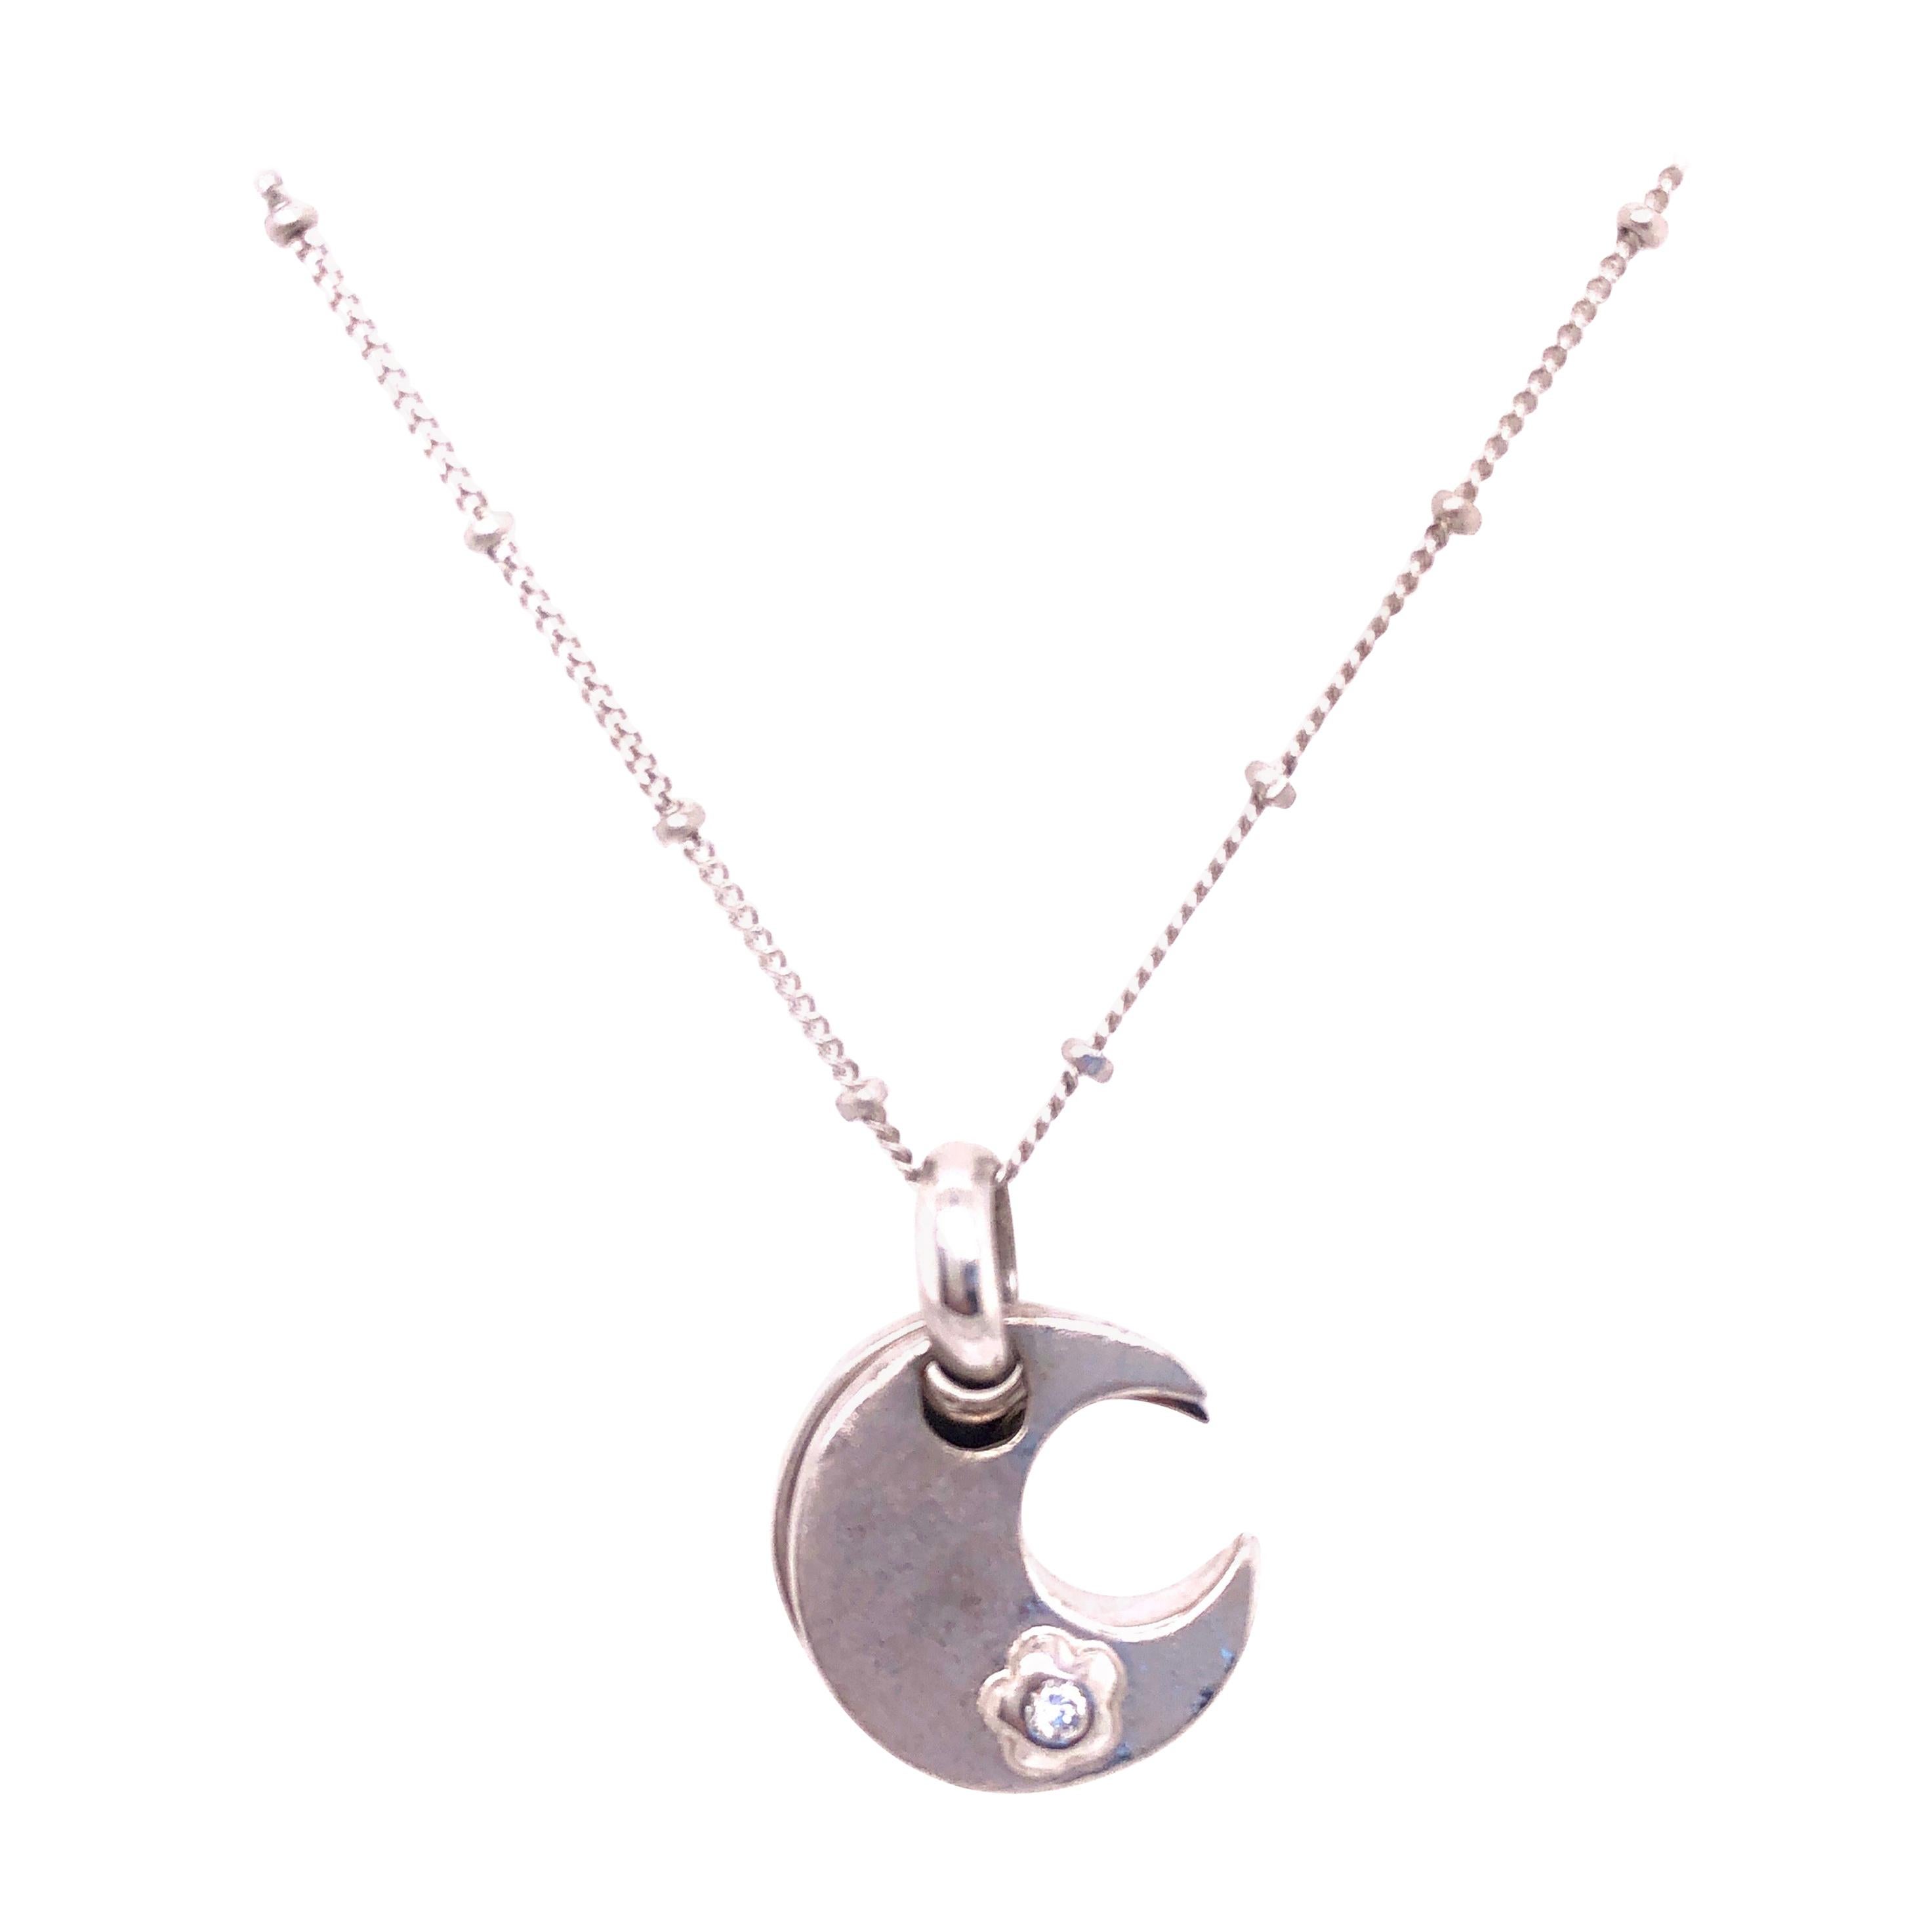 18 Karat White Gold Necklace with Pendant Charm 0.10 Carat Round Diamond